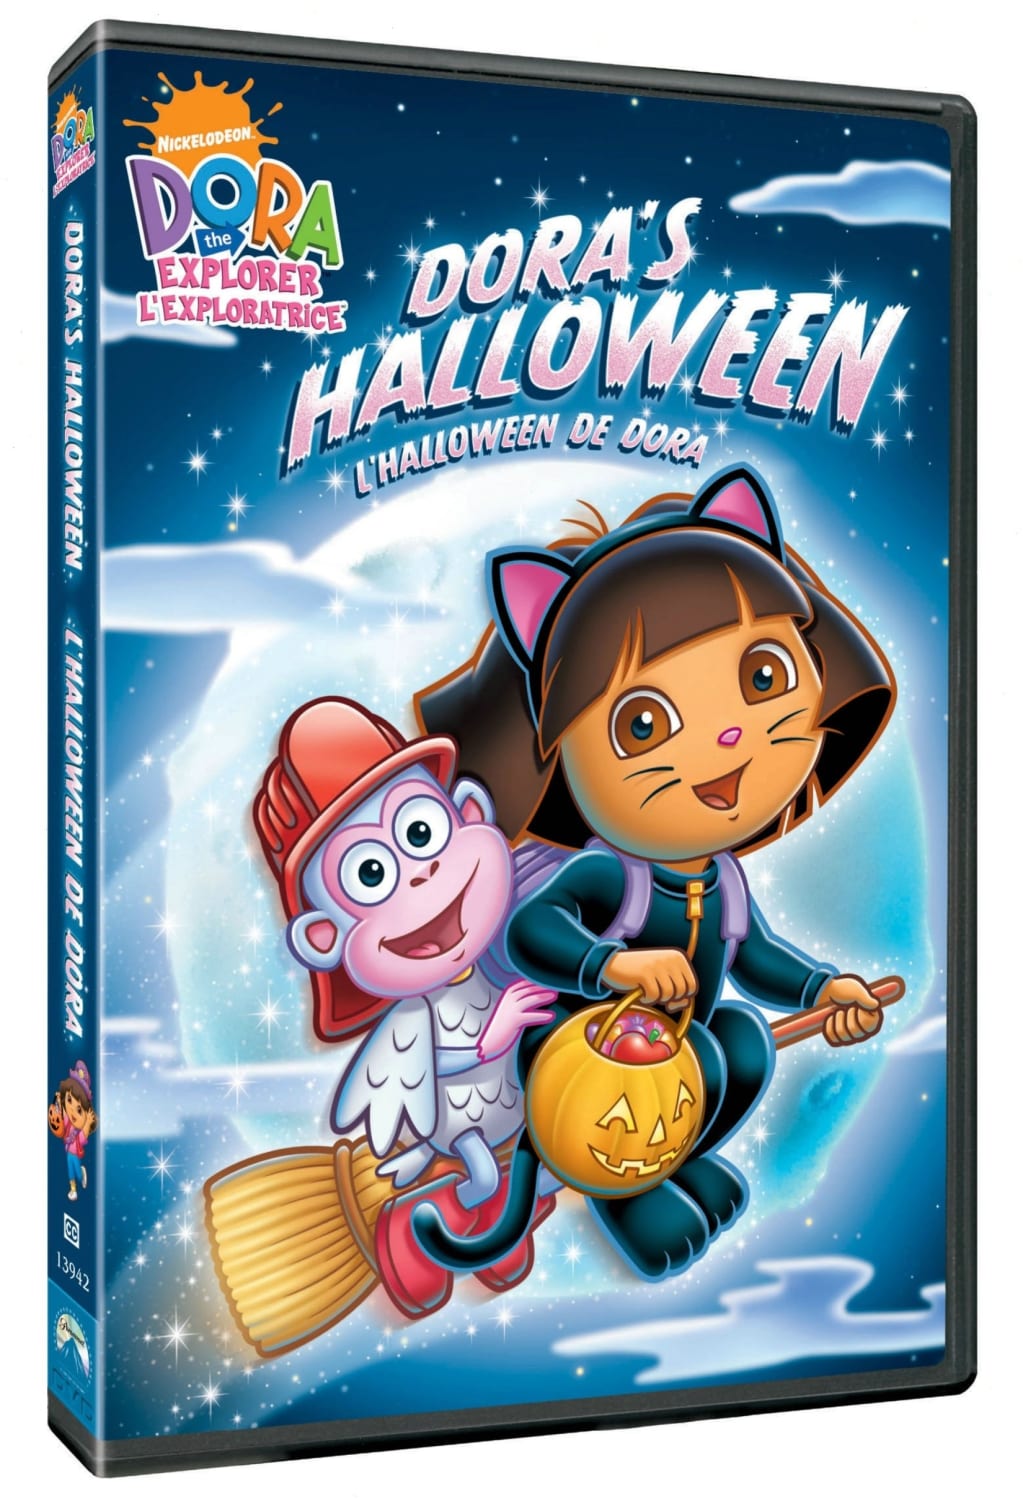 Dora the Explorer – Dora’s Halloween (DVD)